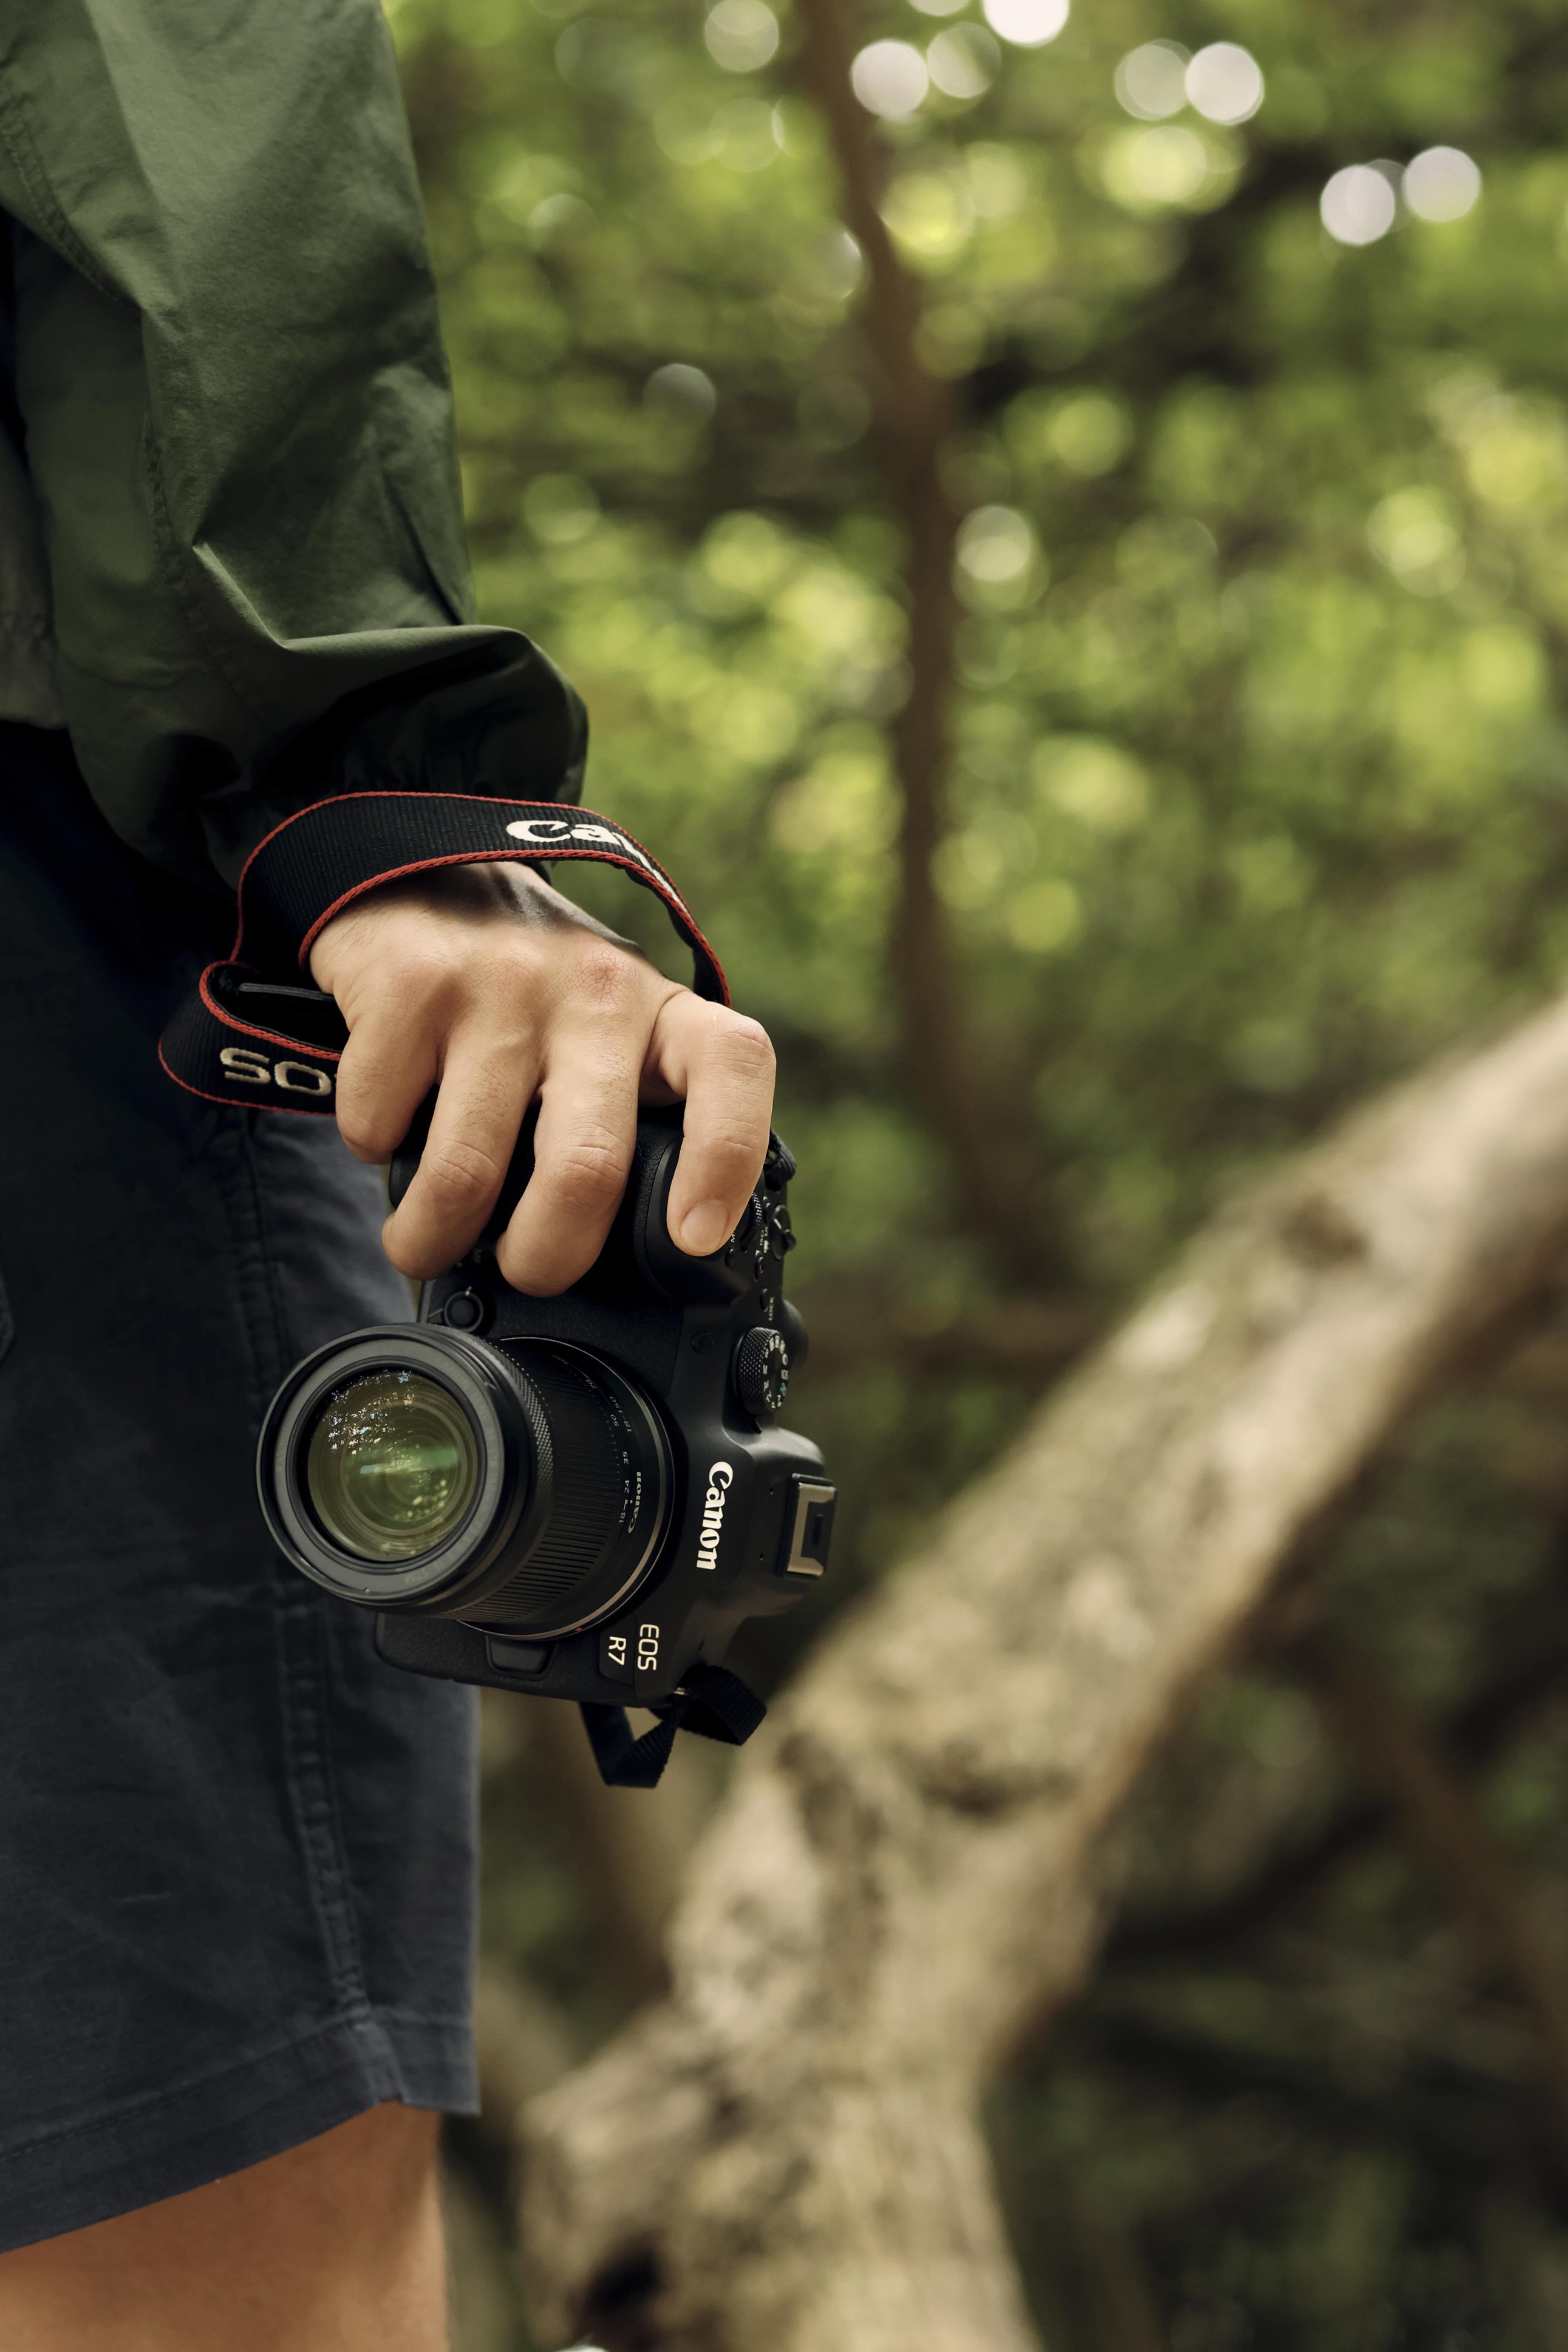 camara digital canon mirrorless r7 incluye 1 lente rf-s 18-150mm f